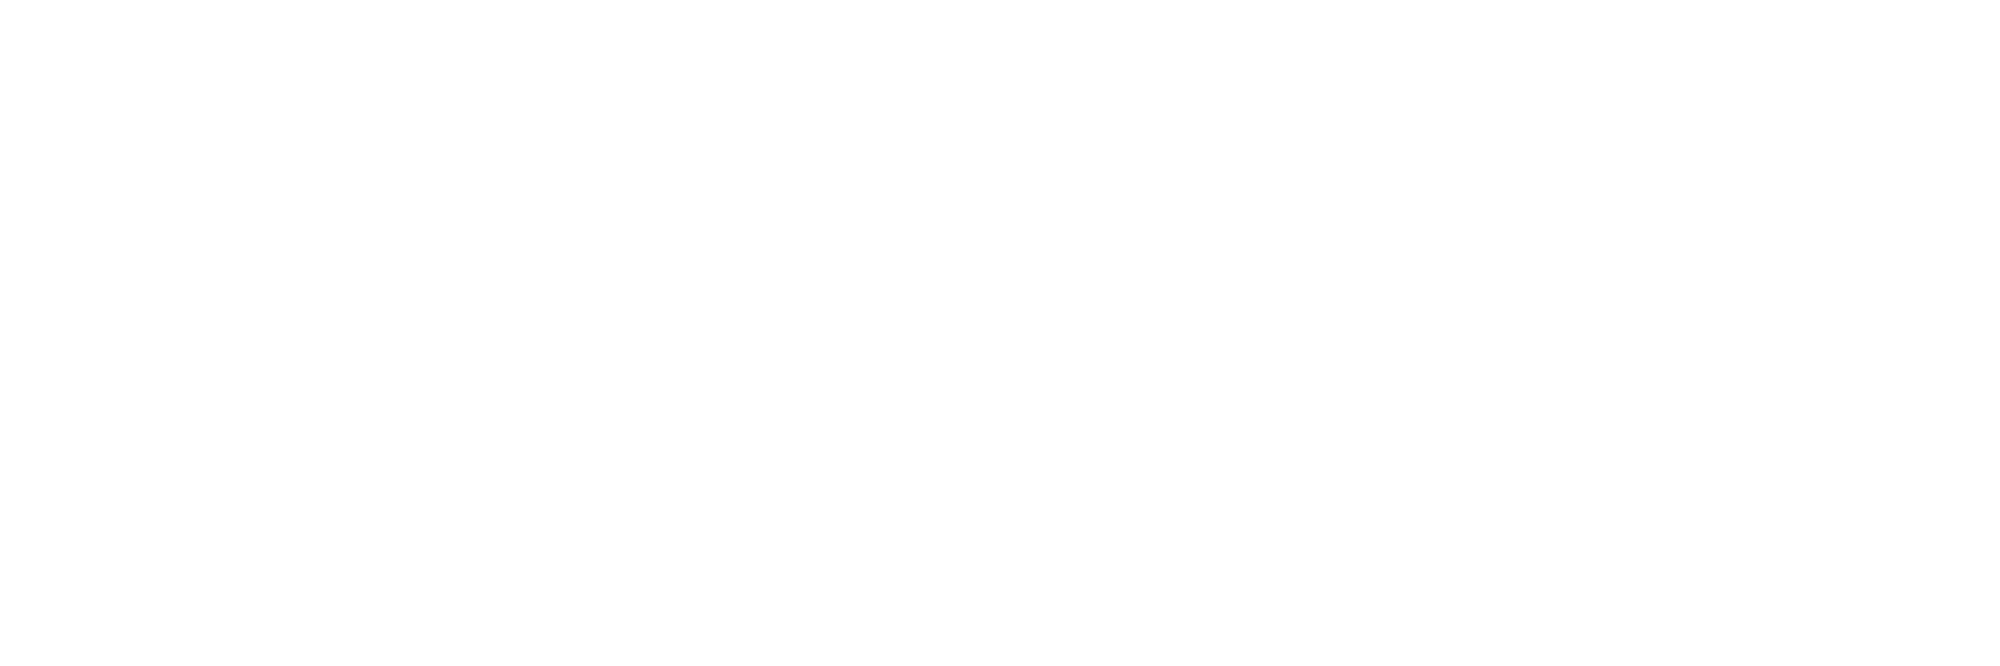 Whispering Woods logo